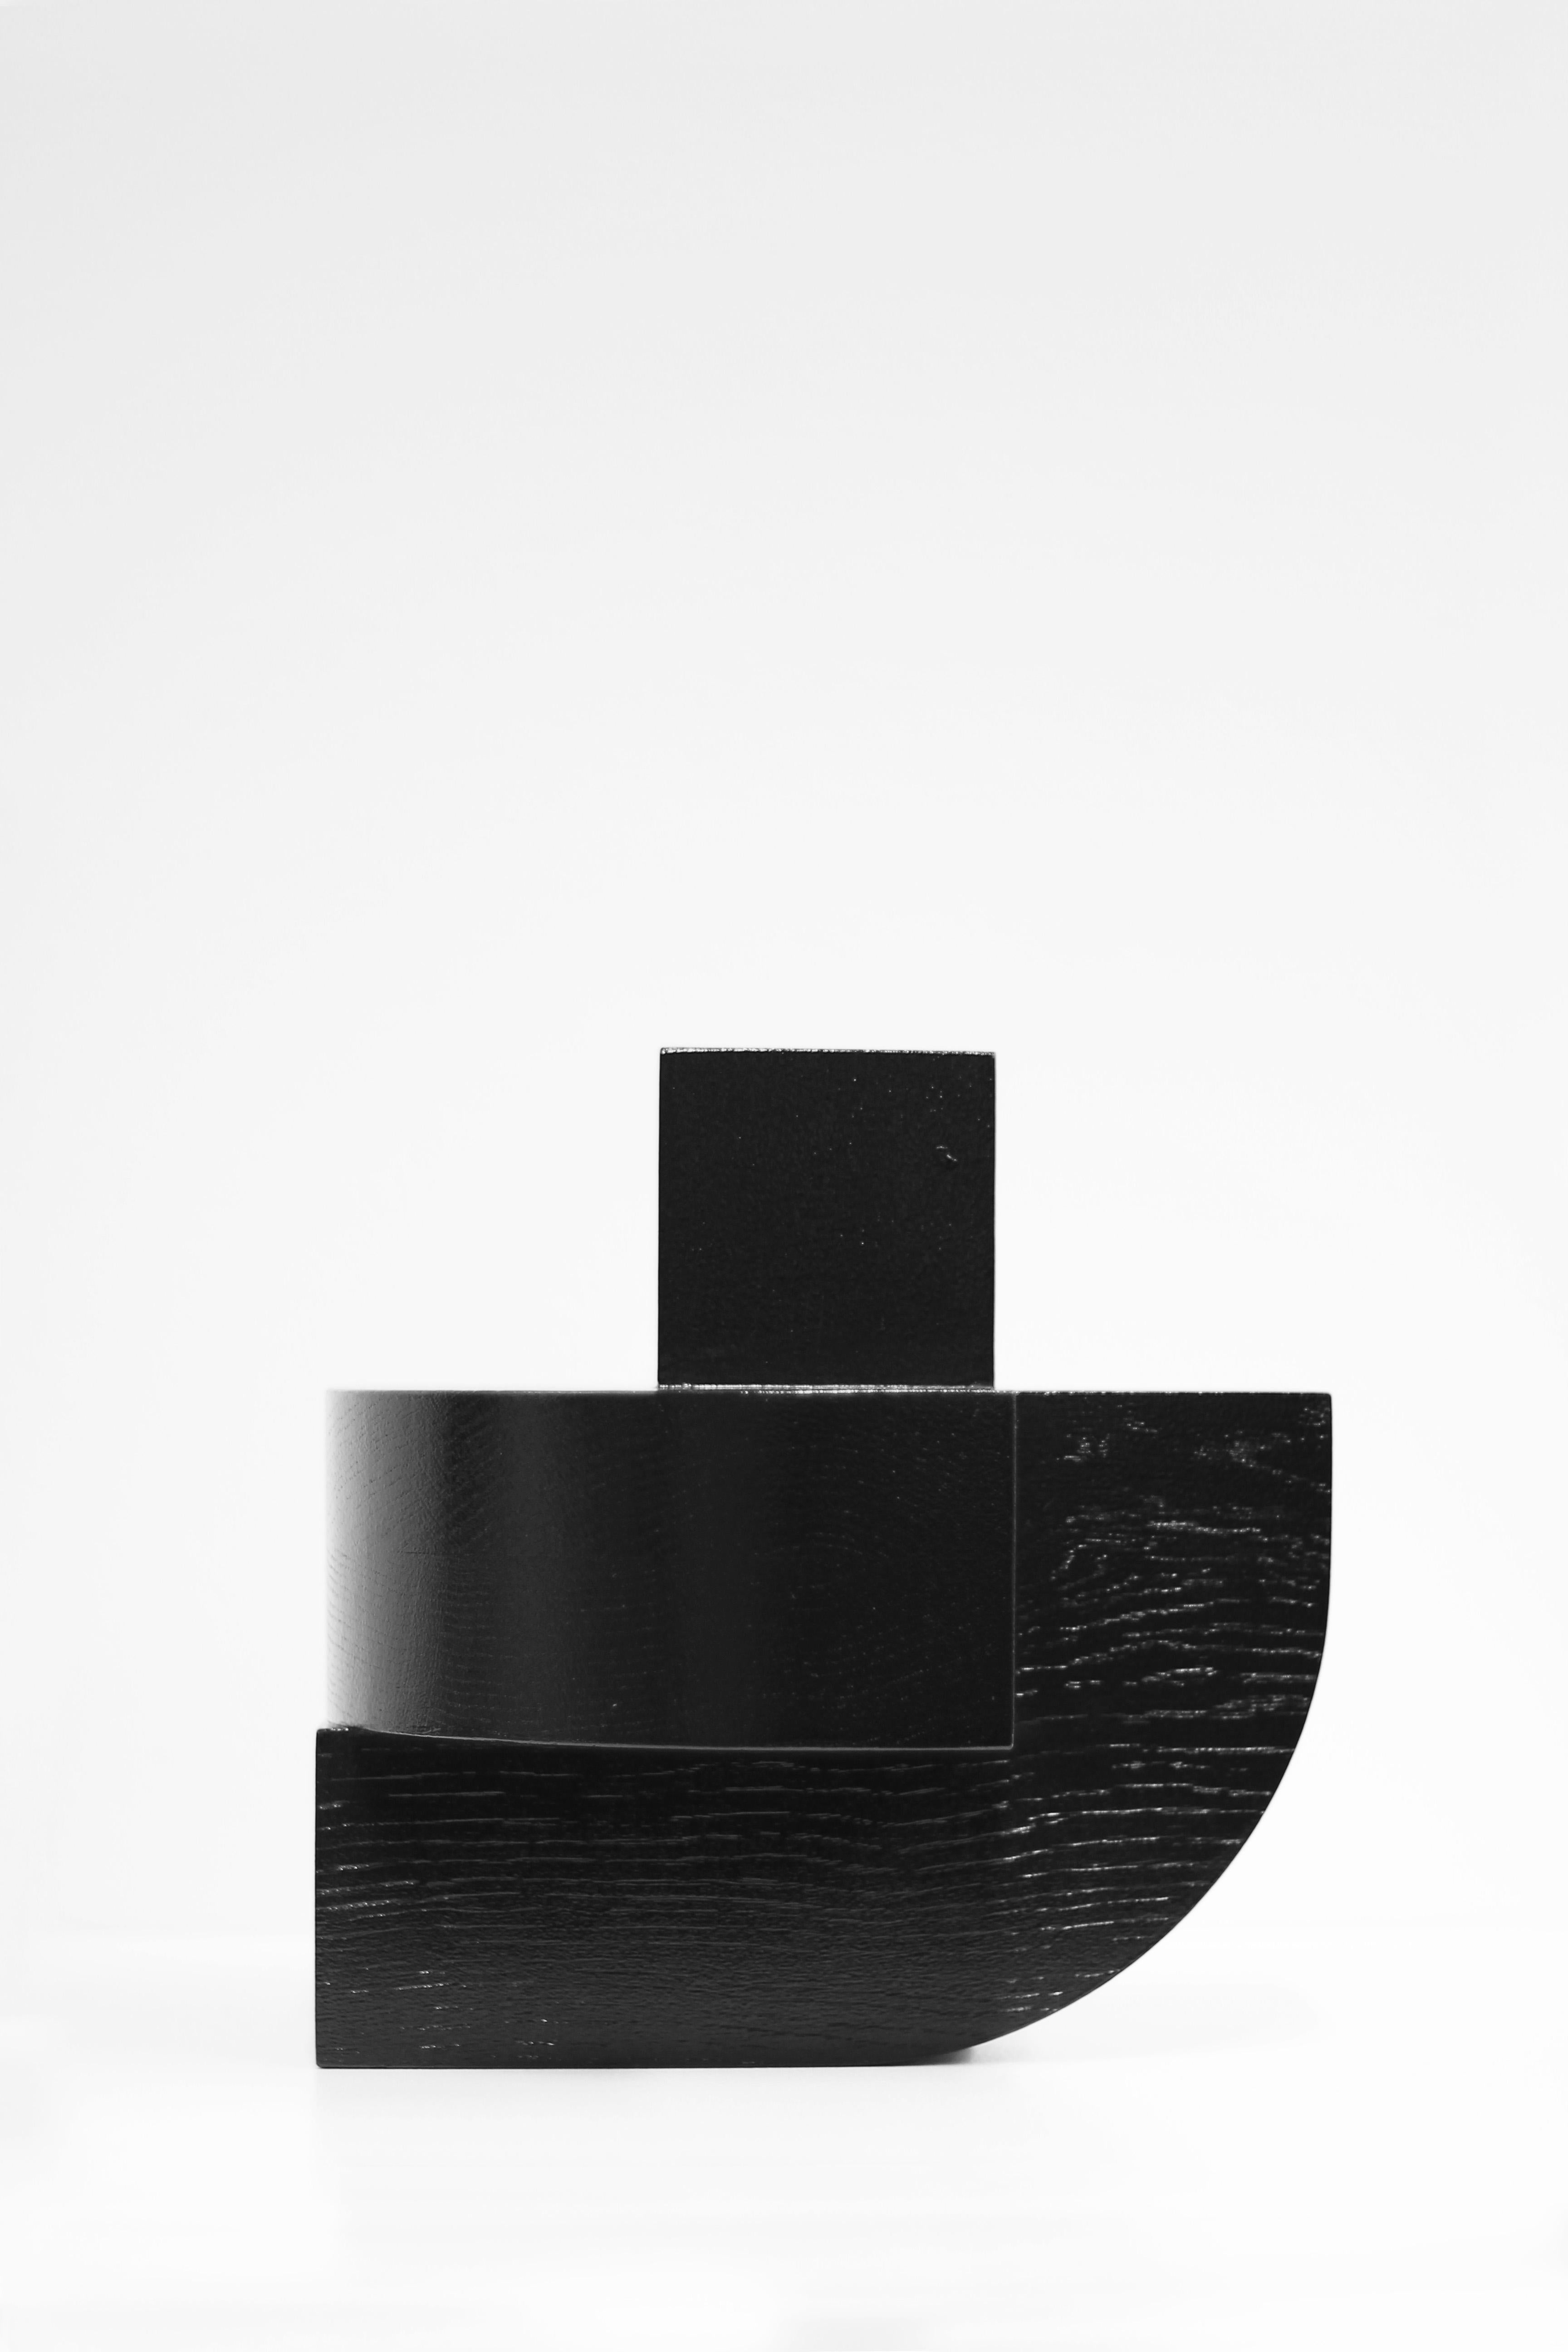 Other Black solid oak sculpture, X4 J, by Dutch Studio Verbaan For Sale